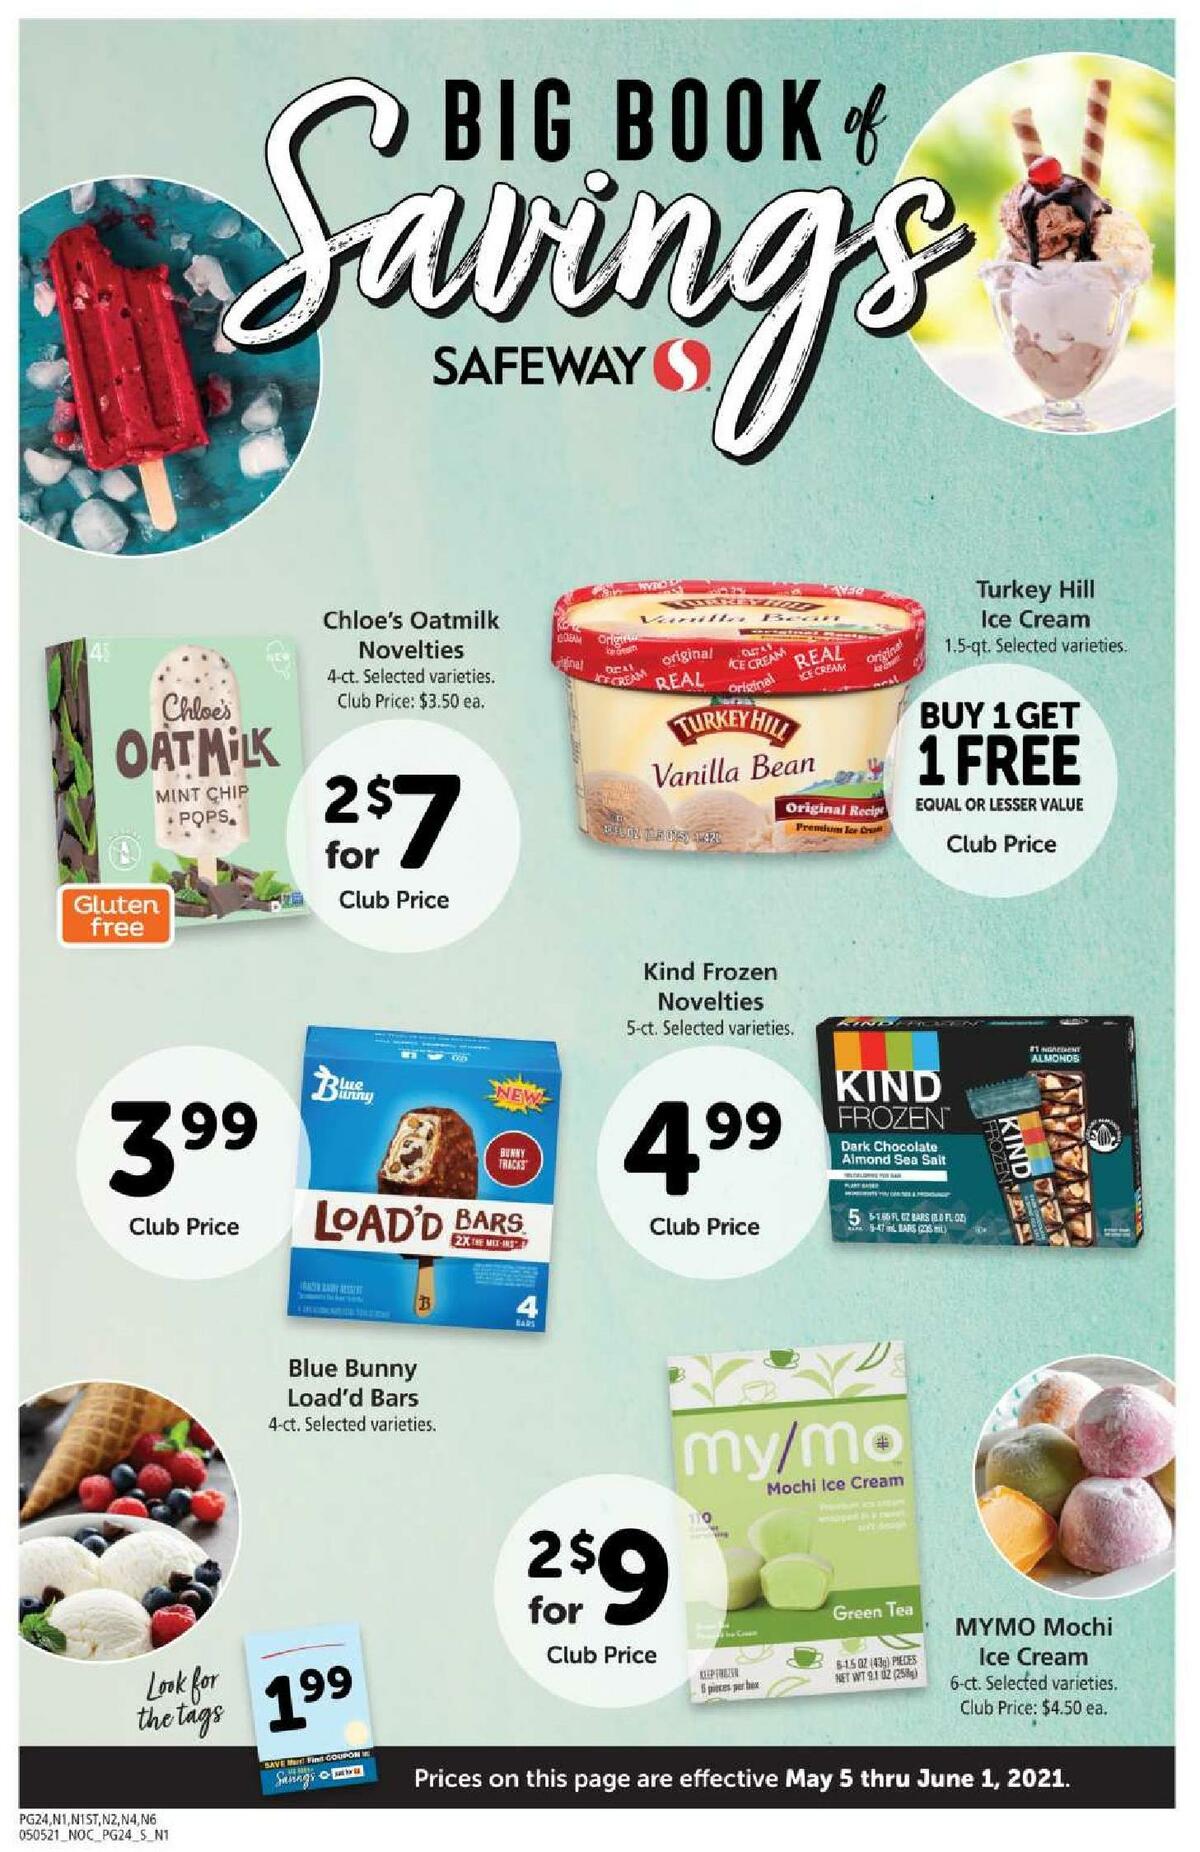 Safeway Big Book of Savings Weekly Ad from May 5